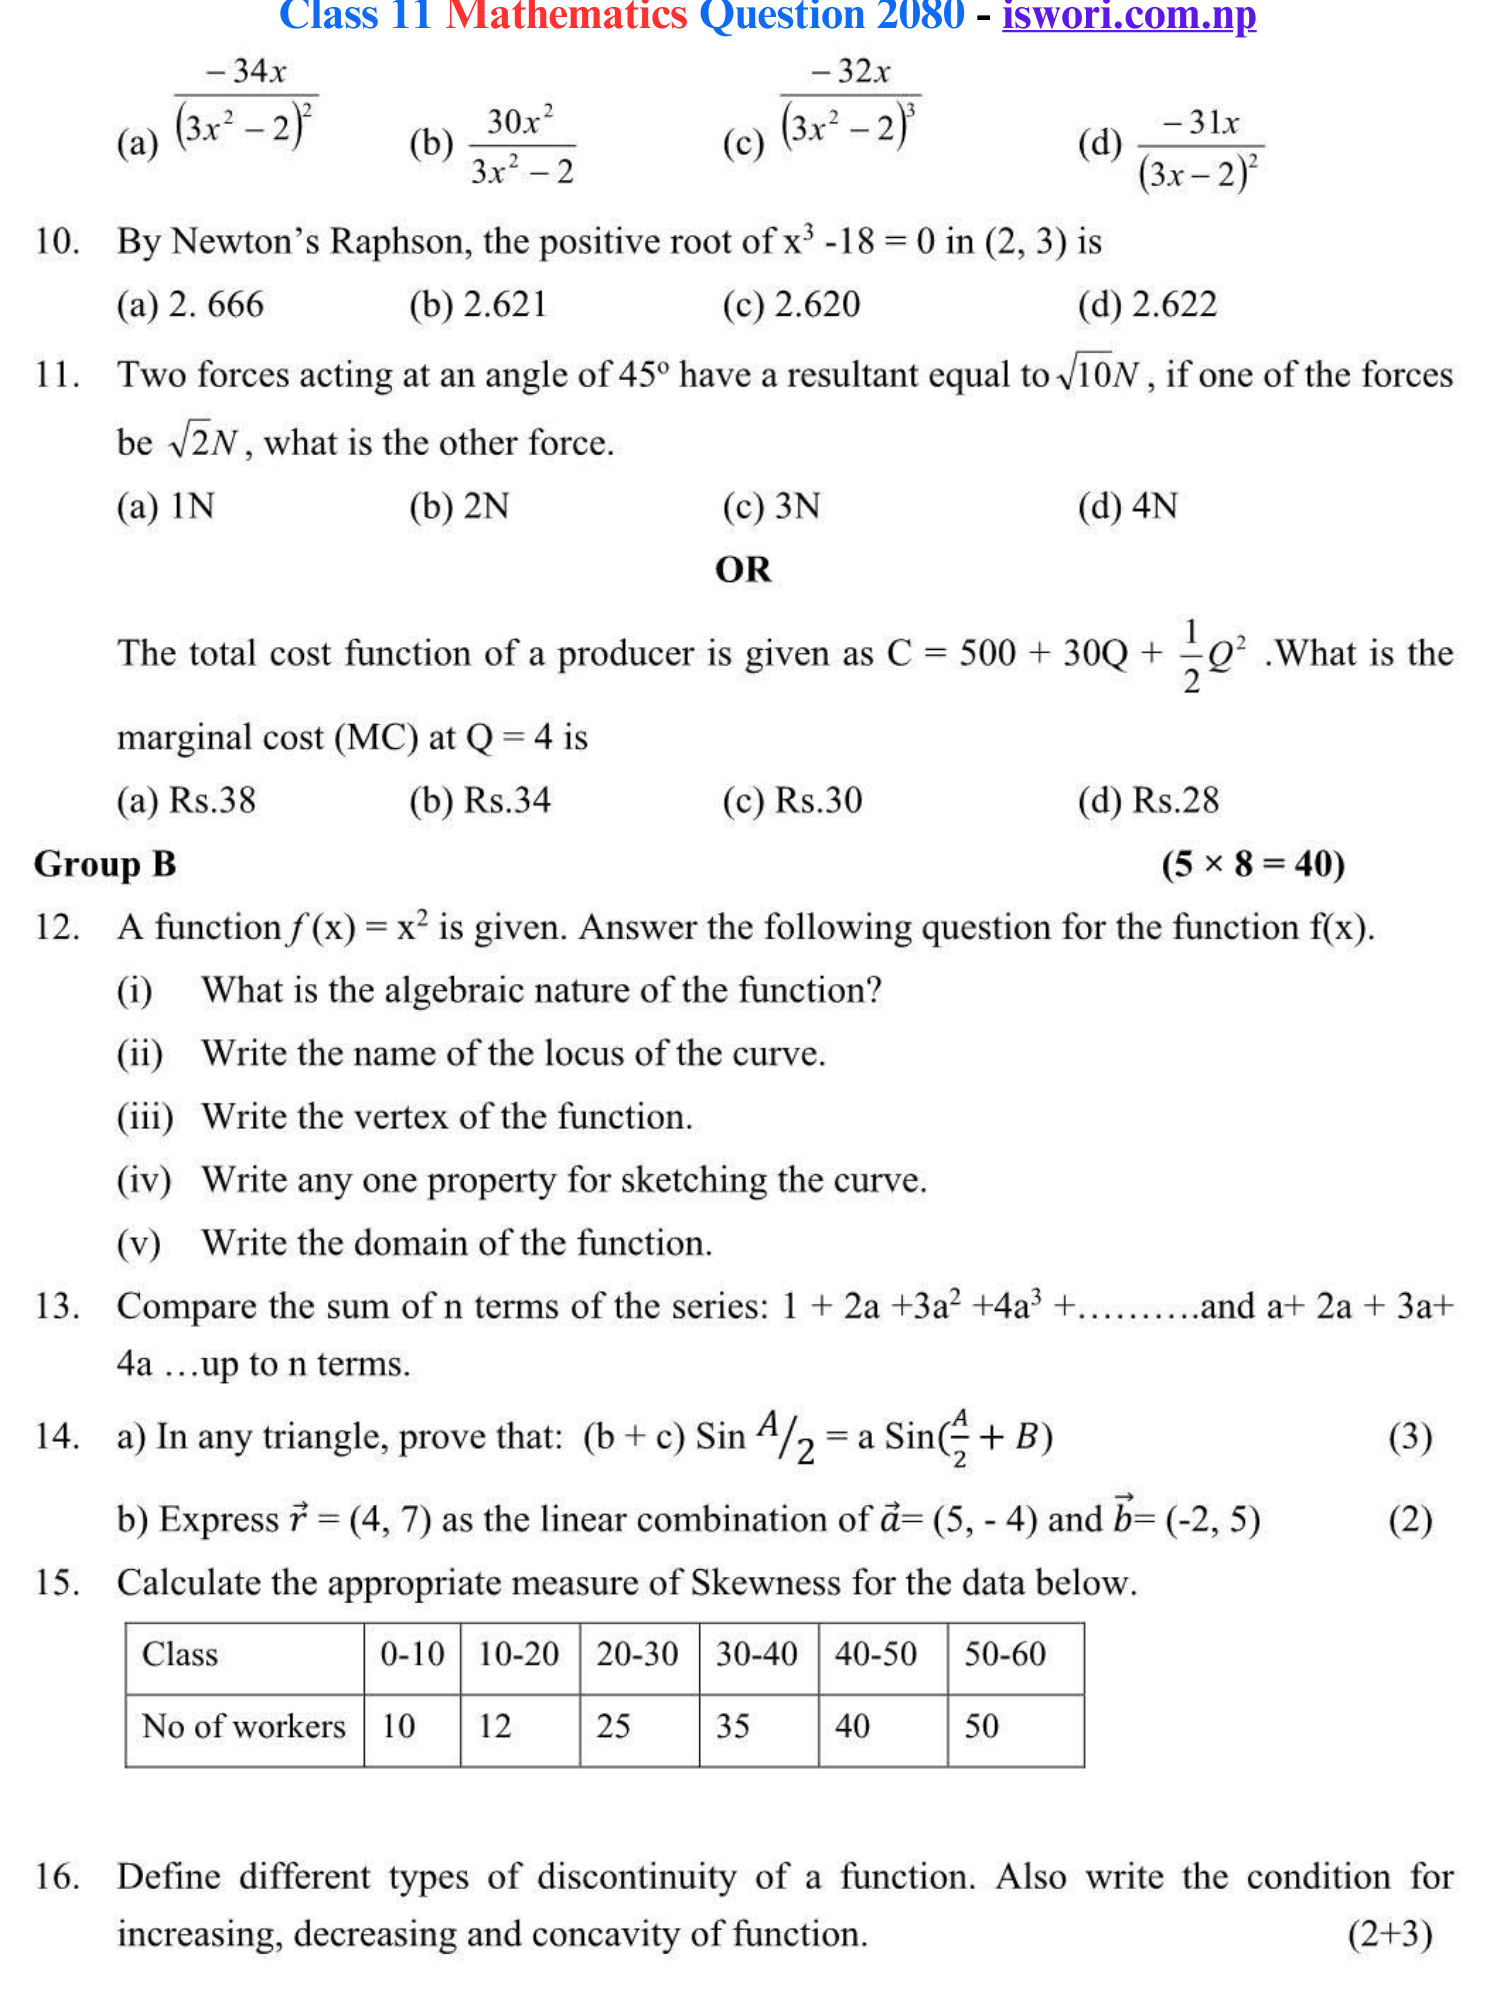 NEB Class 11 Mathematics Model Question 2080 PDF